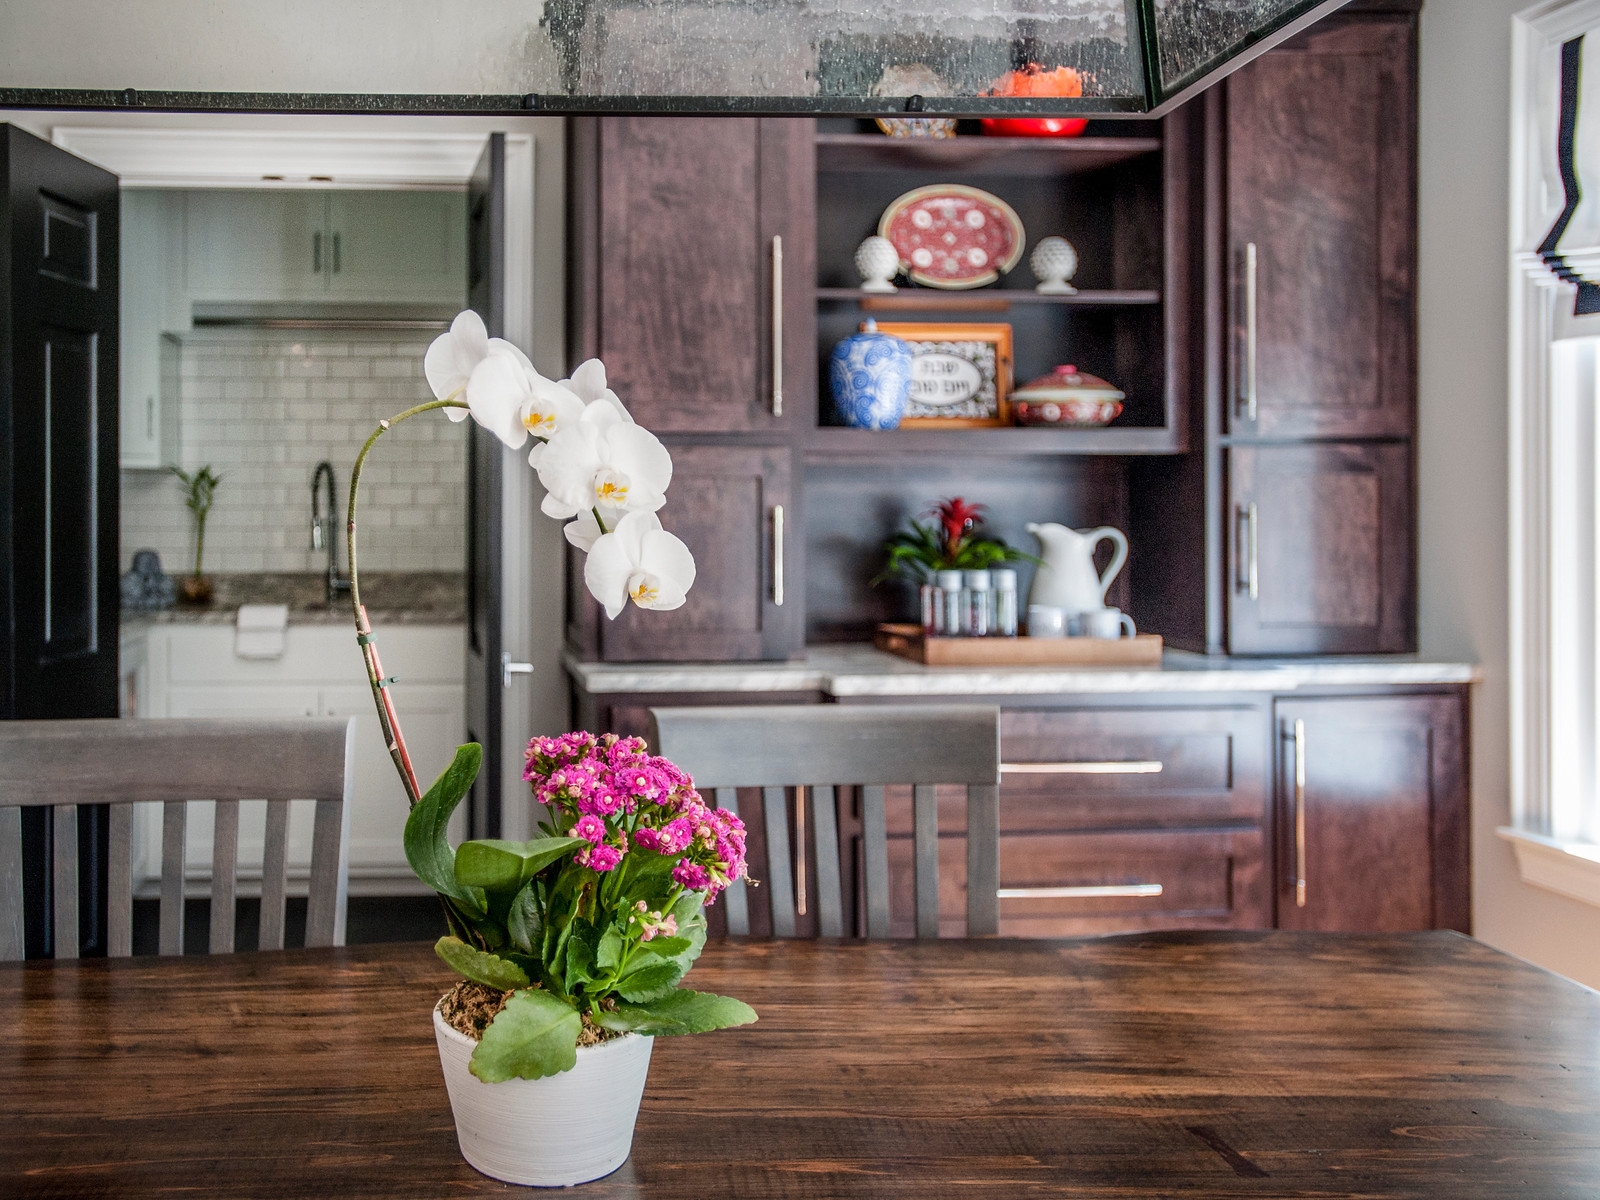 breakfast-dining-table-flower-arrangement-interior-design